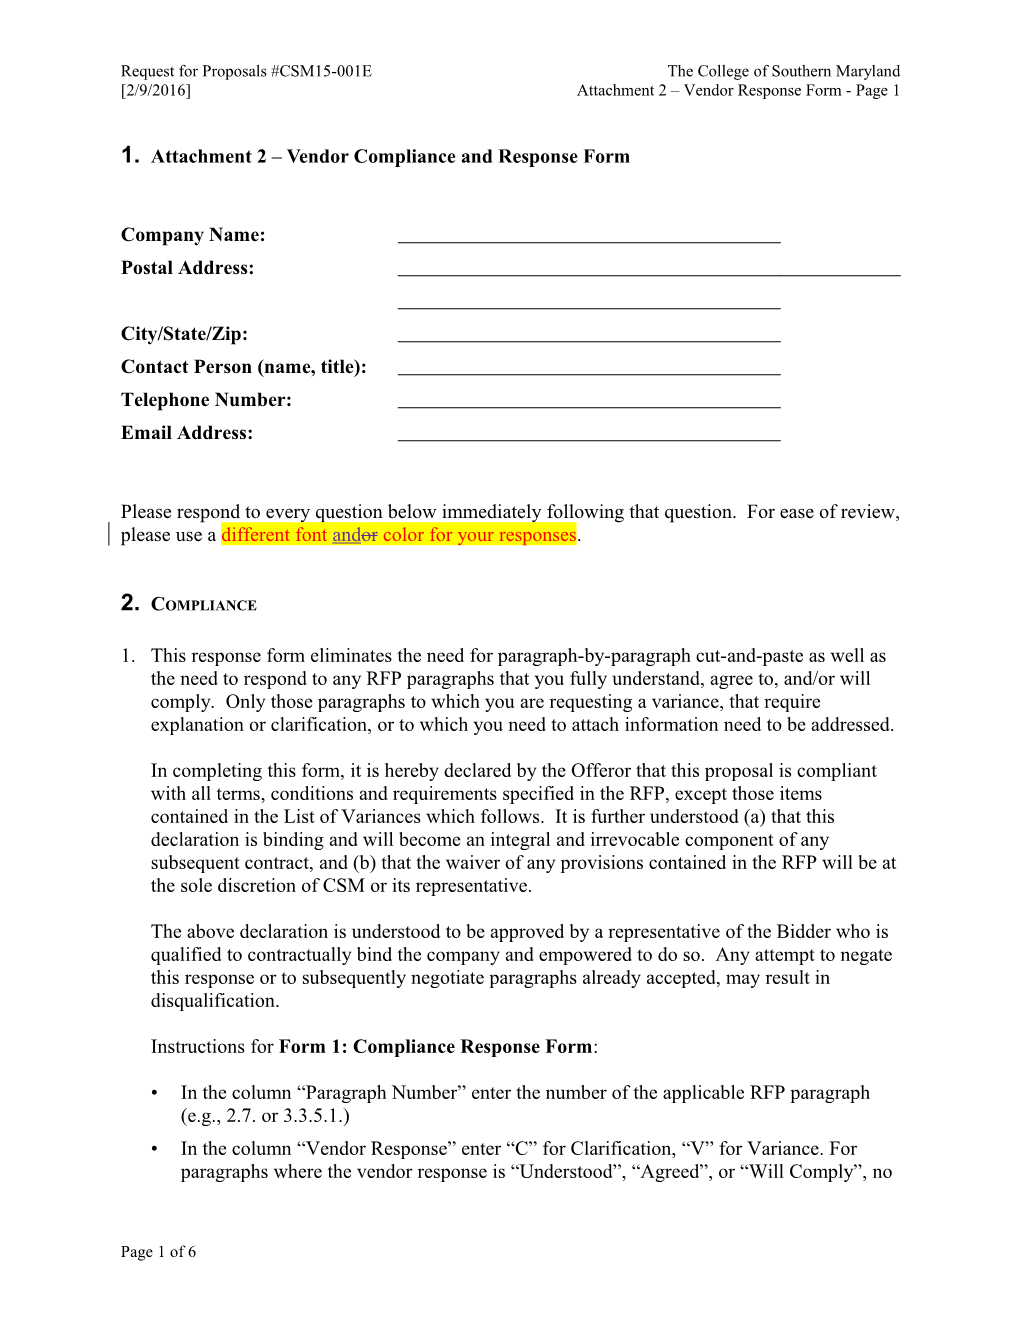 Attachment2 Vendor Compliance and Response Form